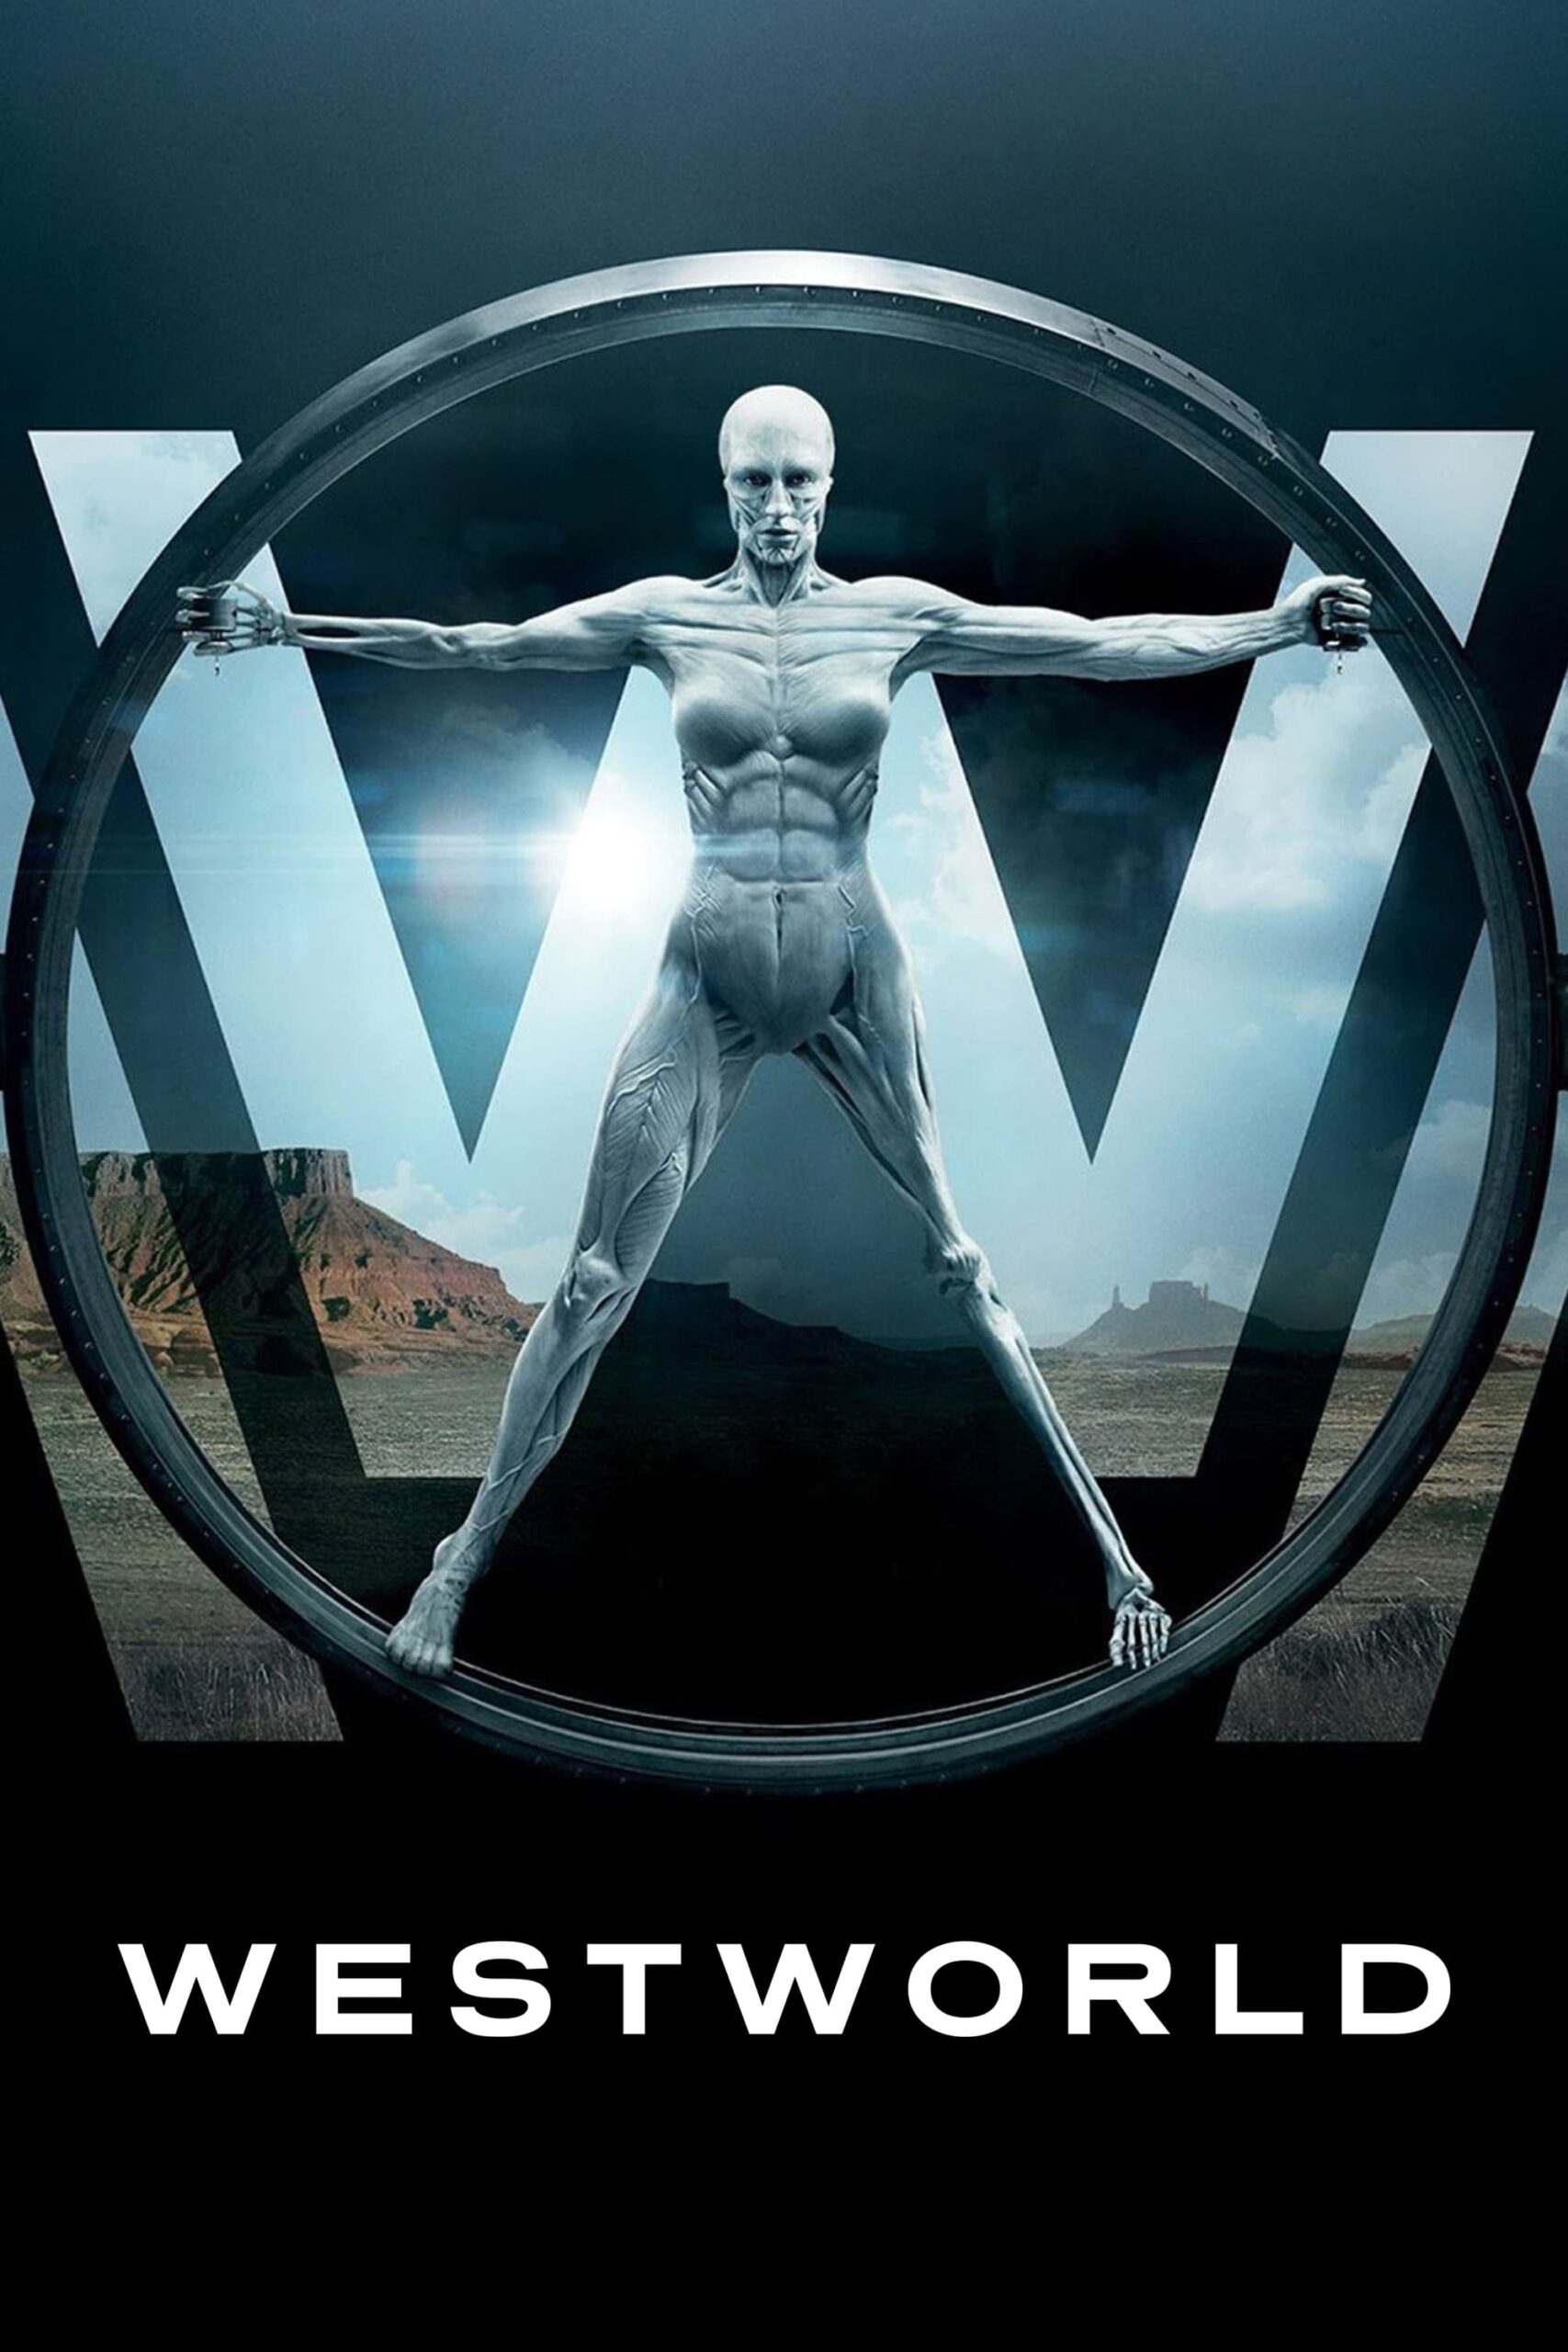 Plakát pro film “Westworld”